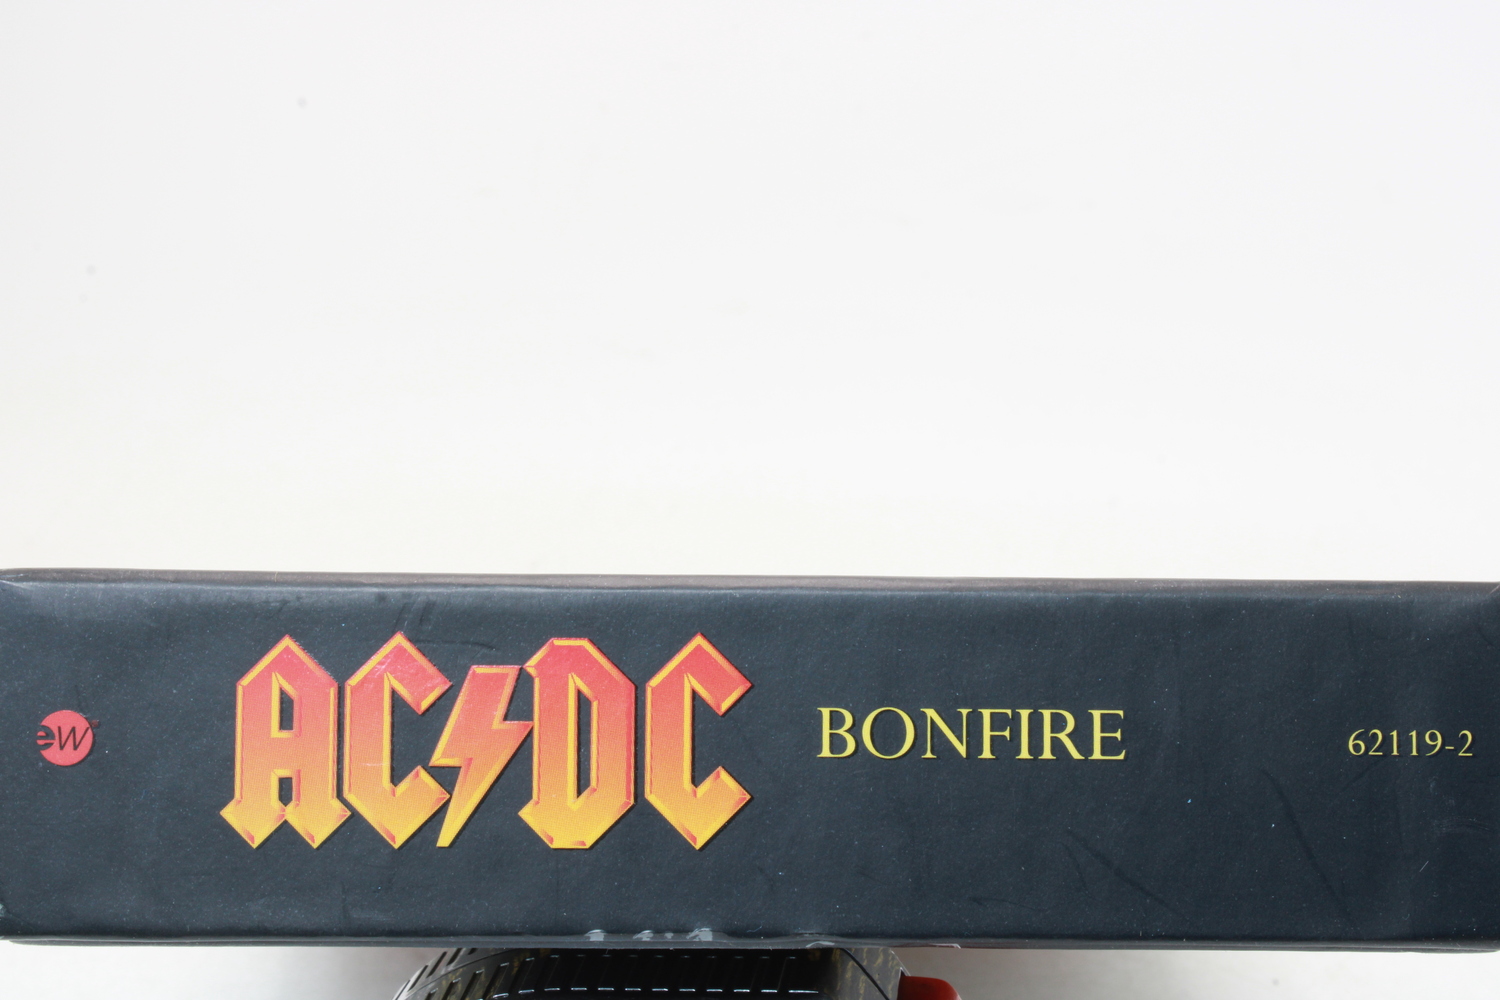 AC/DC bonfire box set